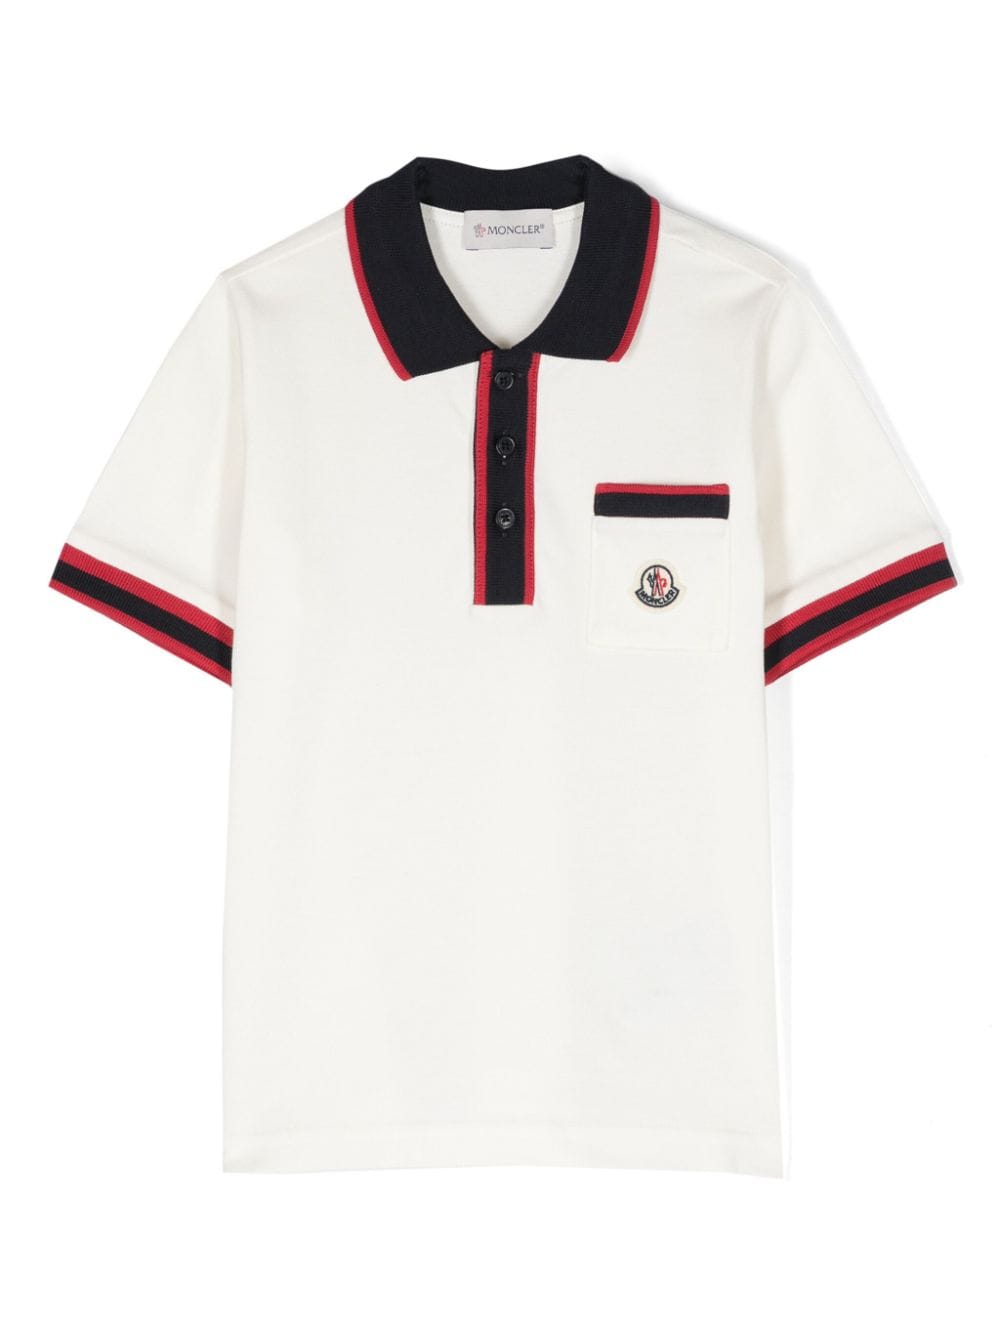 Moncler Enfant logo-patch cotton polo shirt - White von Moncler Enfant